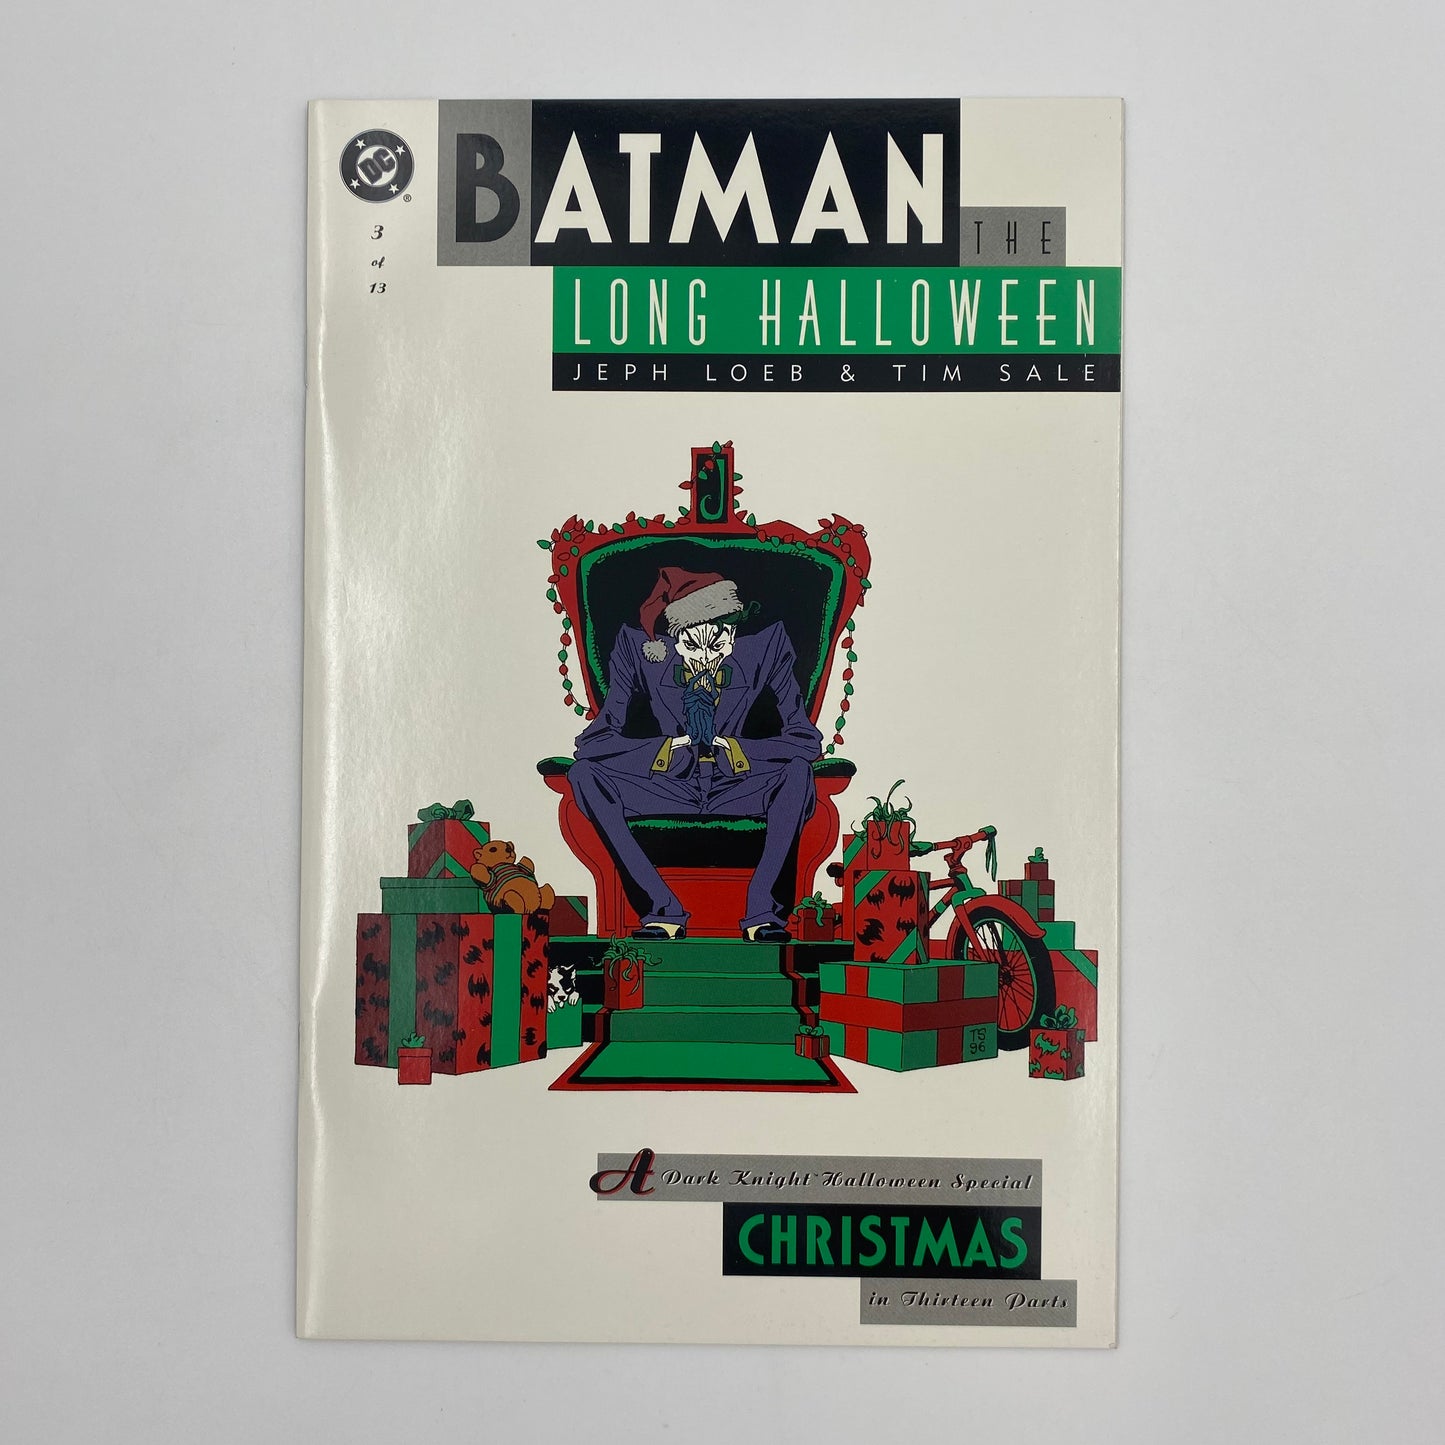 Batman The Long Halloween 1-13 (1997-1998) DC